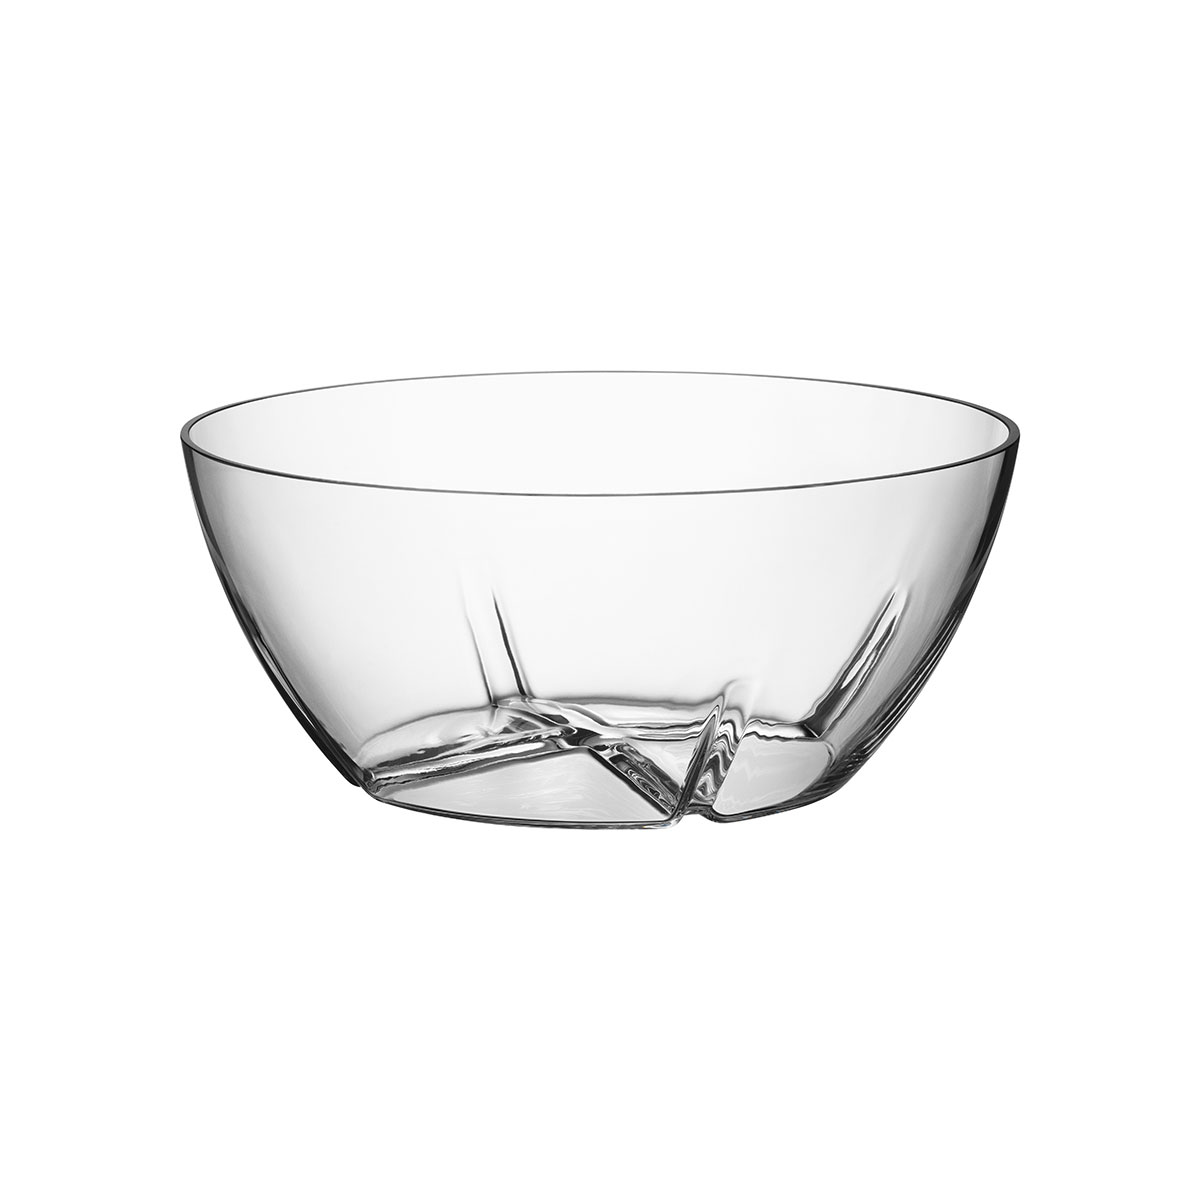 Kosta Boda Bruk Serving Crystal Bowl, Large